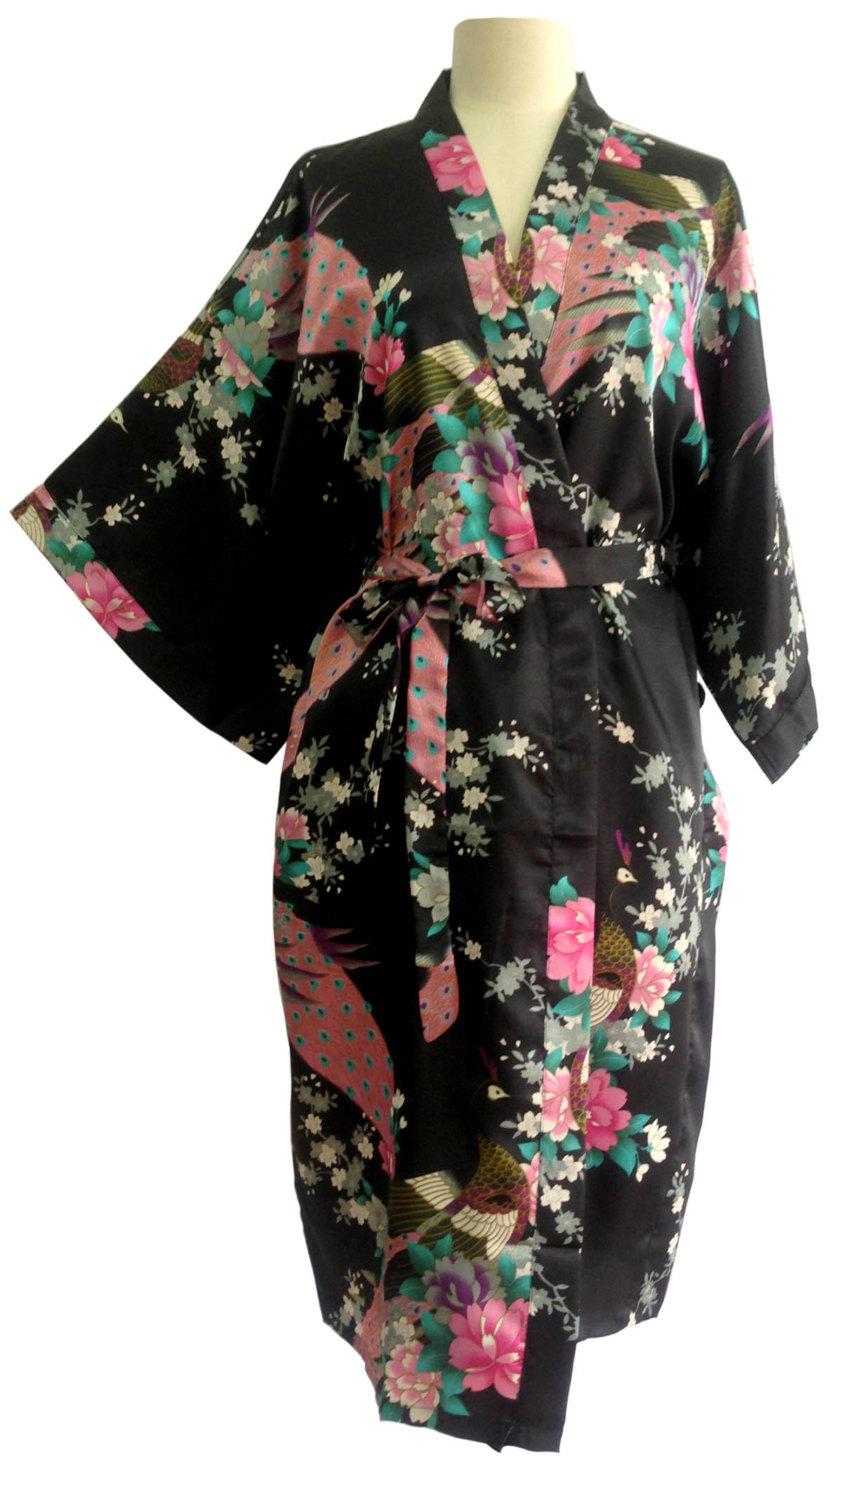 Wedding - On Sale Kimono Robes Bridesmaids Silk Satin Black Colour Paint Peacock Design Pattern Gift Wedding dress for Party Free Size